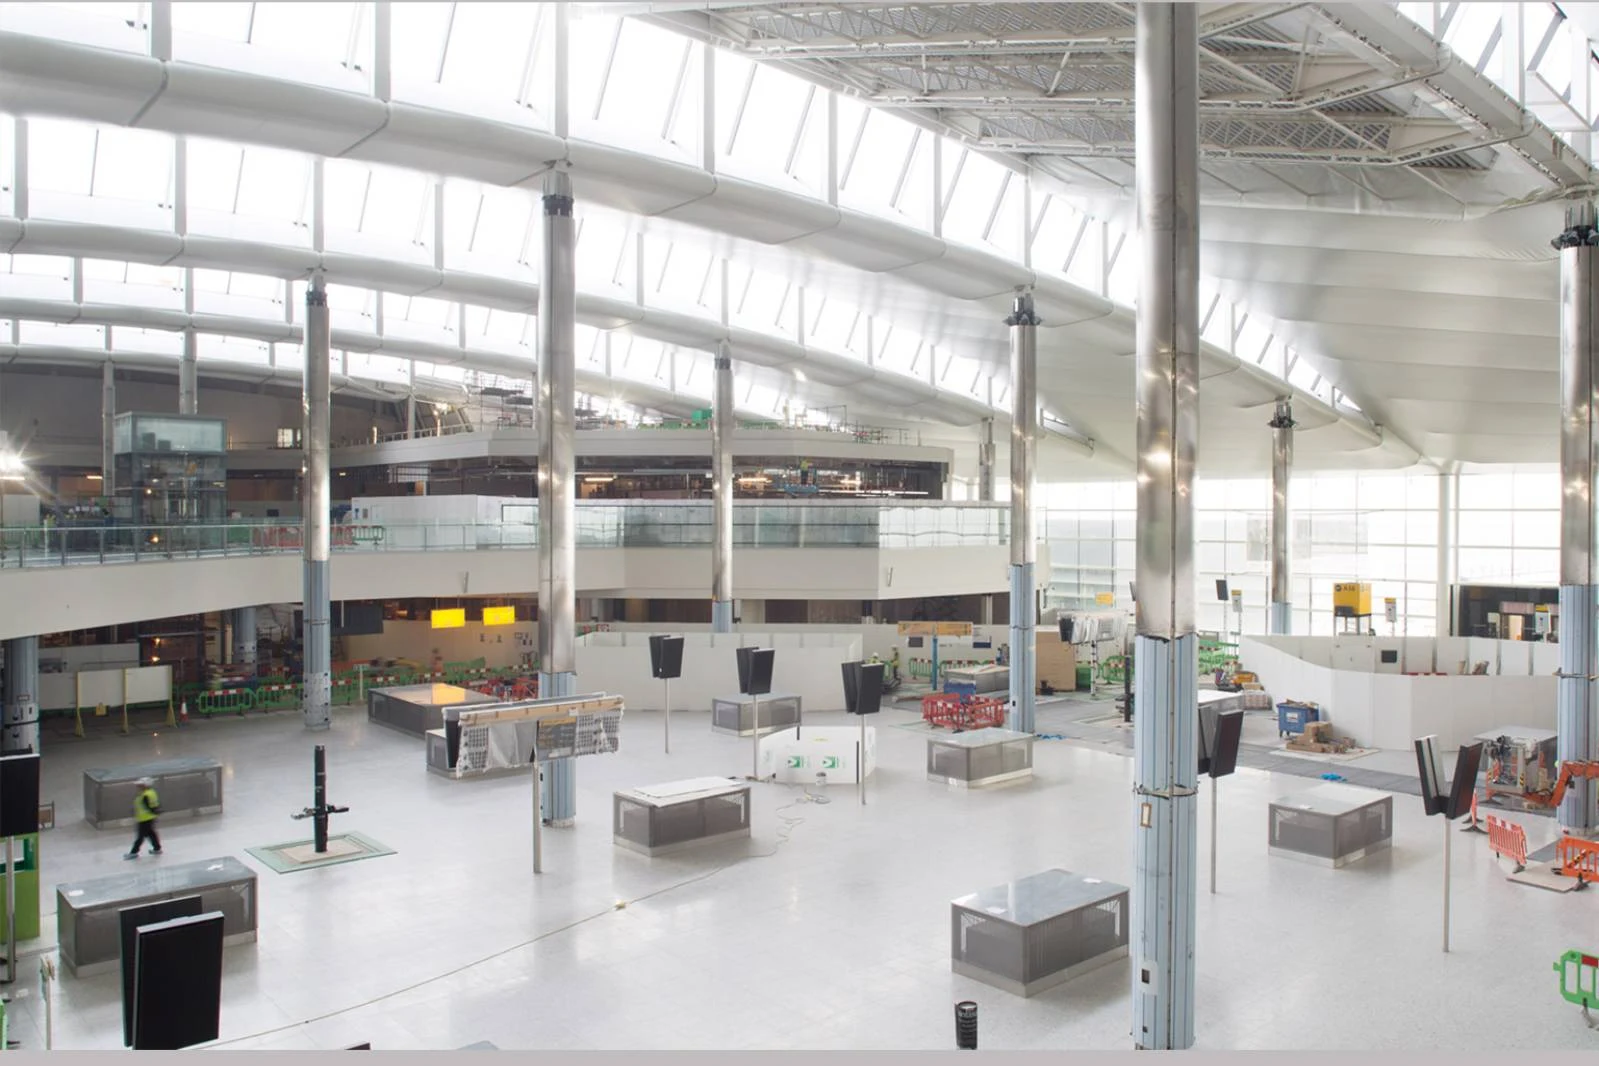 Heathrow New Terminal 2 by Luis Vidal Architects